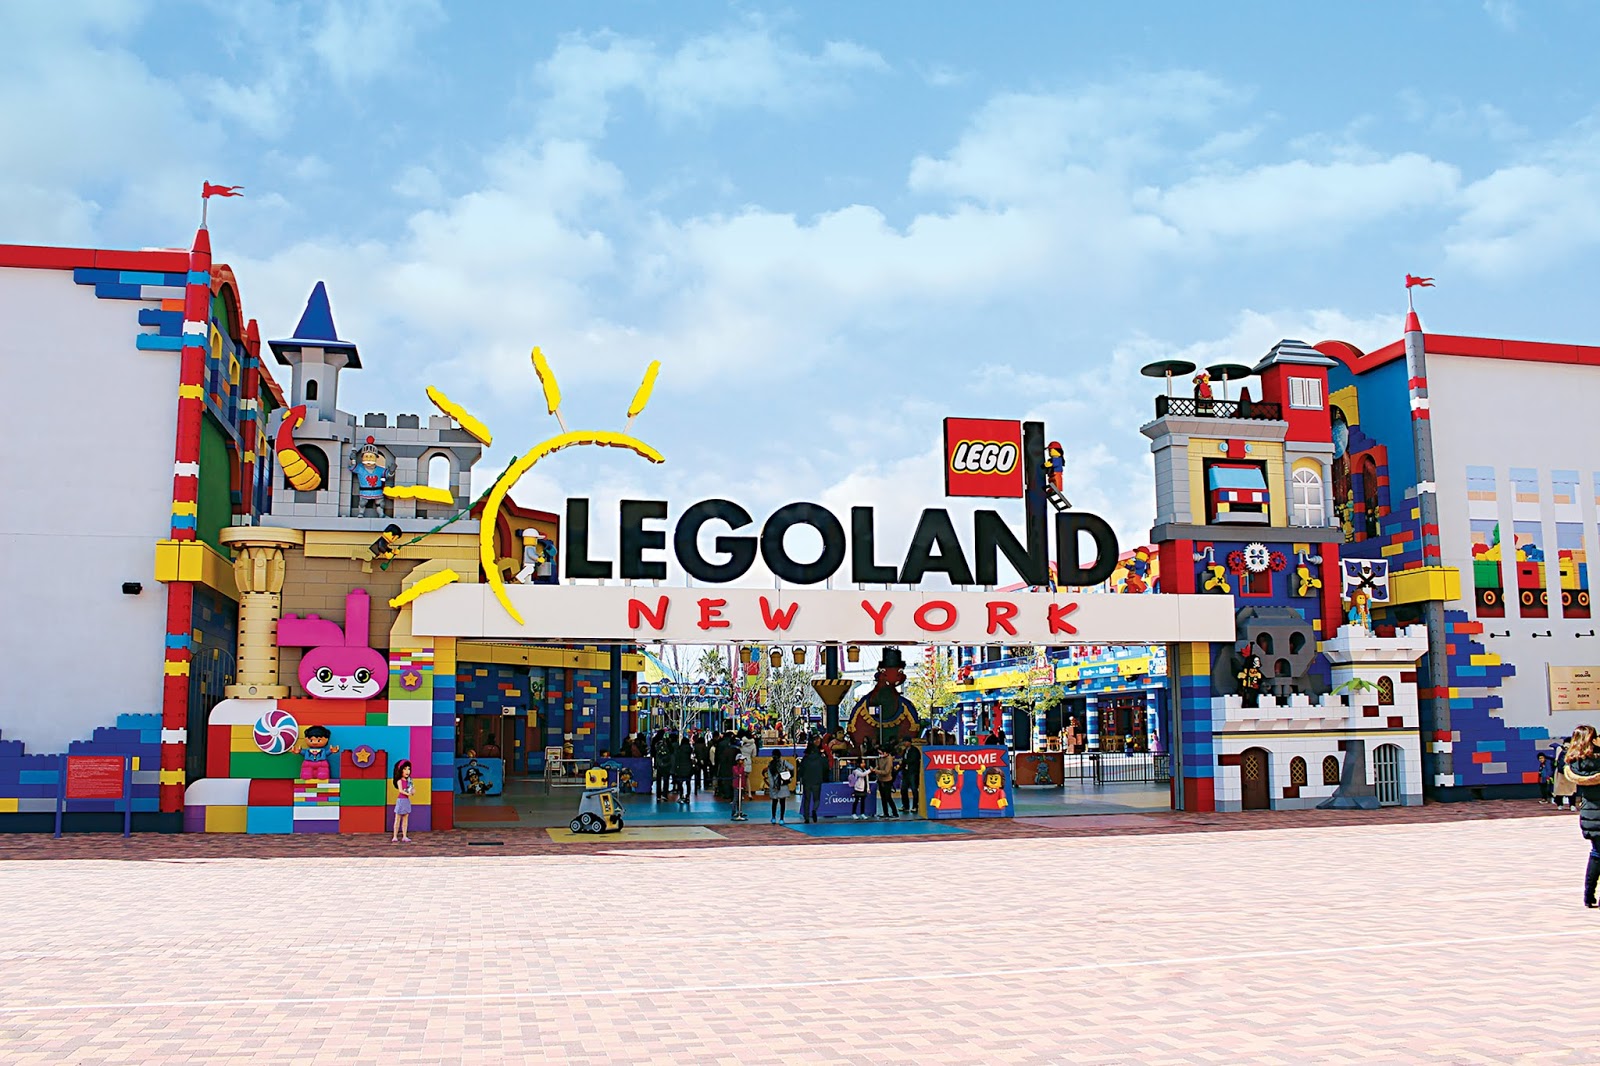 LEGOLAND New York Resort, Holovis and ETF Ride Systems Reveal The LEGO